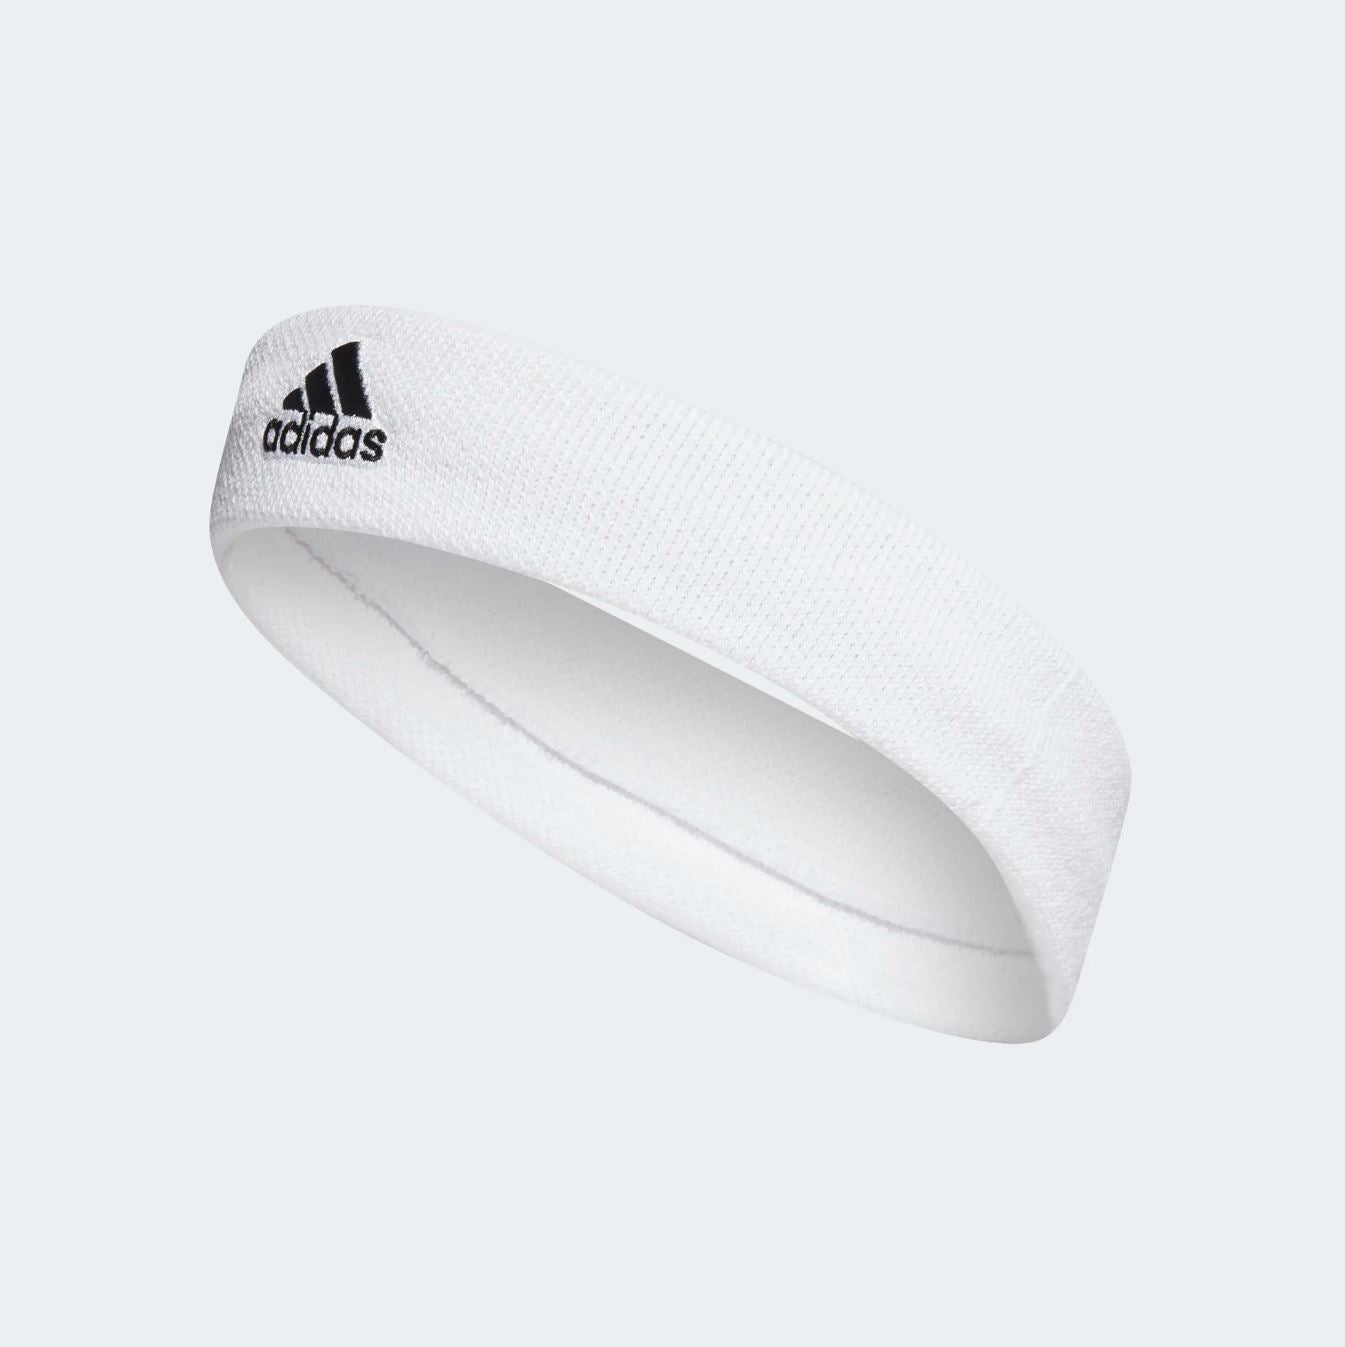 Adidas Headband (White)